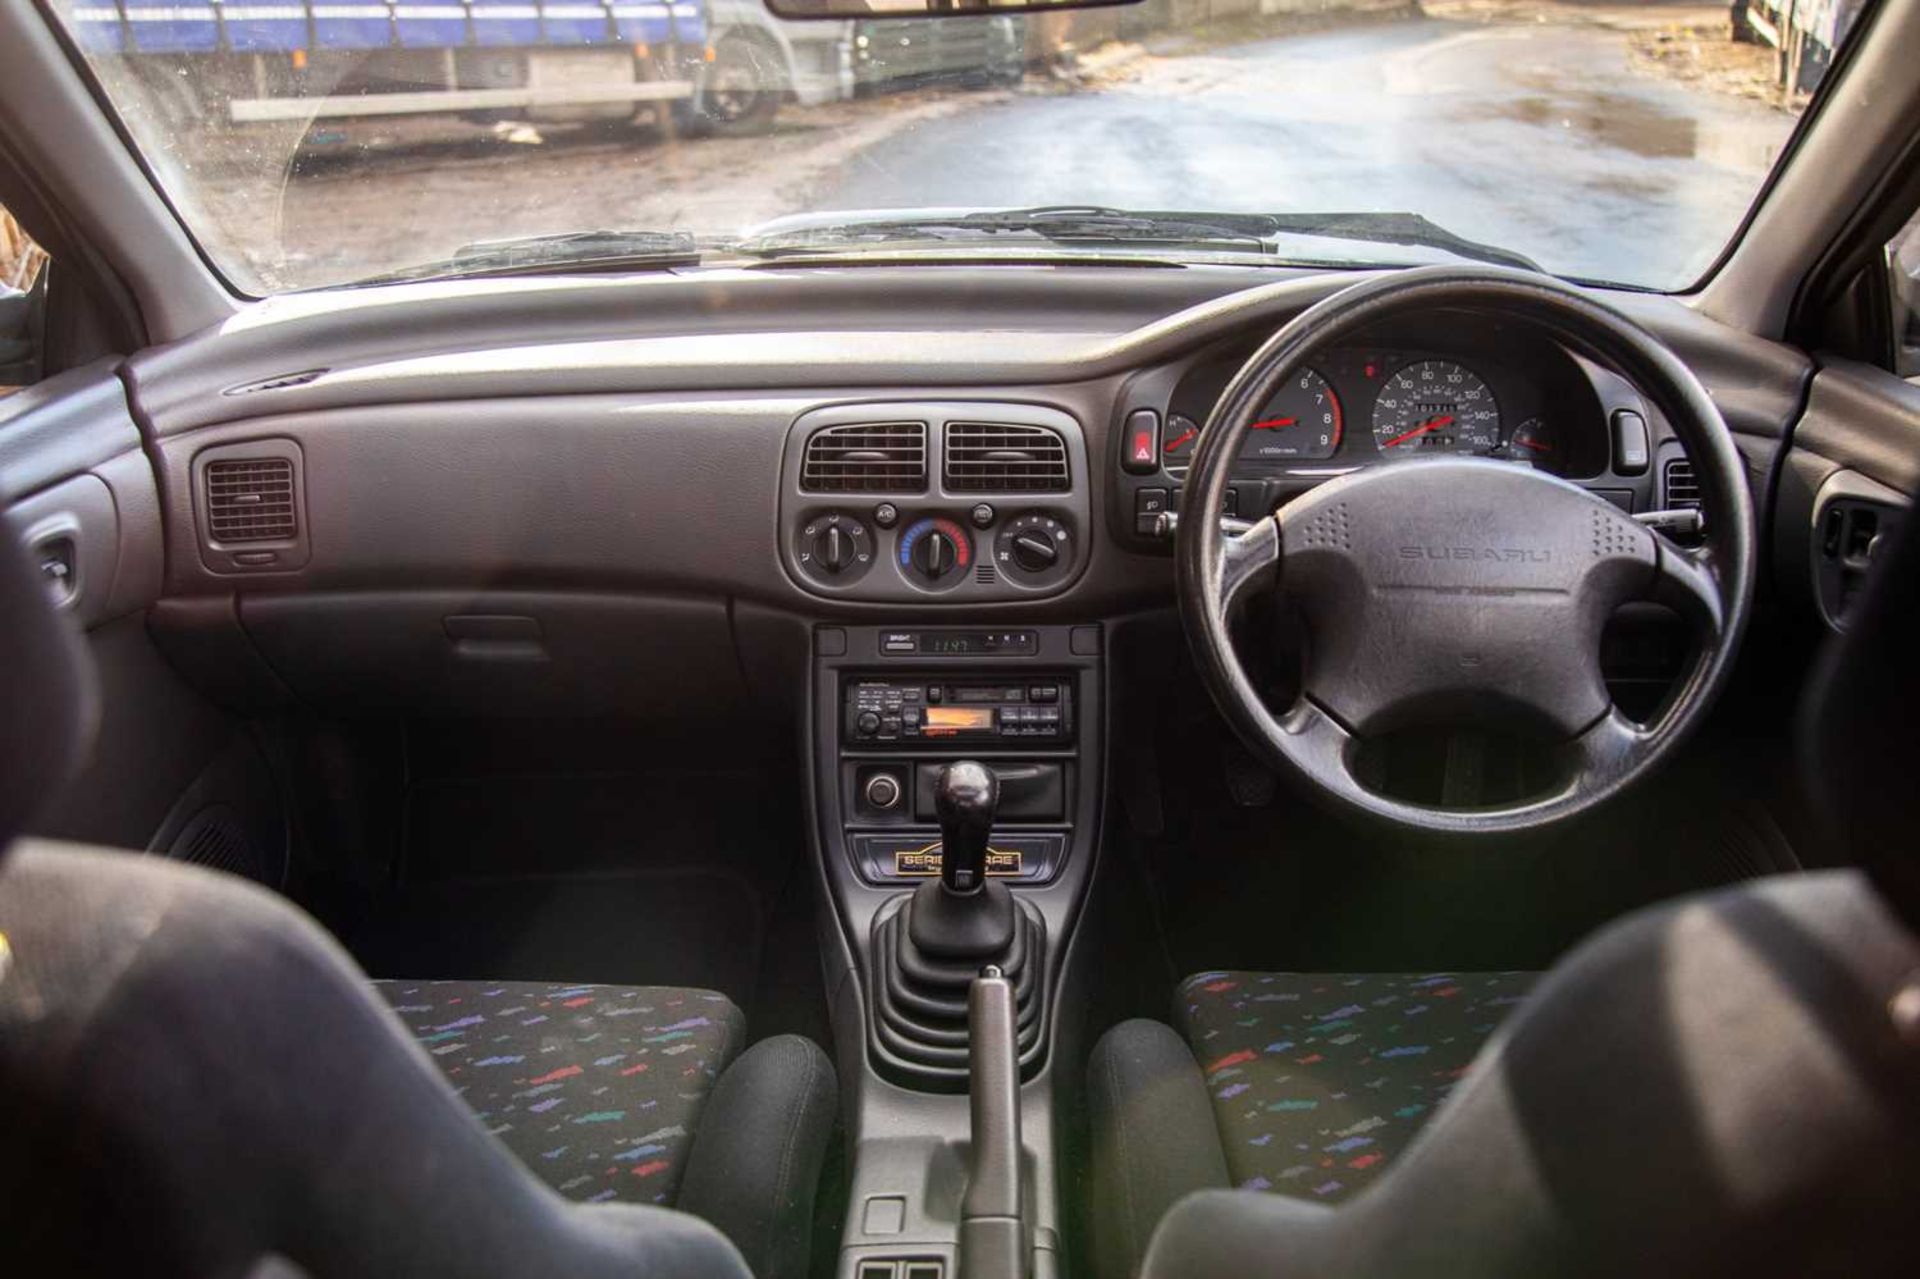 1995 Subaru Impreza Series McRae ***NO RESERVE*** Number 005 of 200 examples prepared by Prodrive - Image 66 of 118